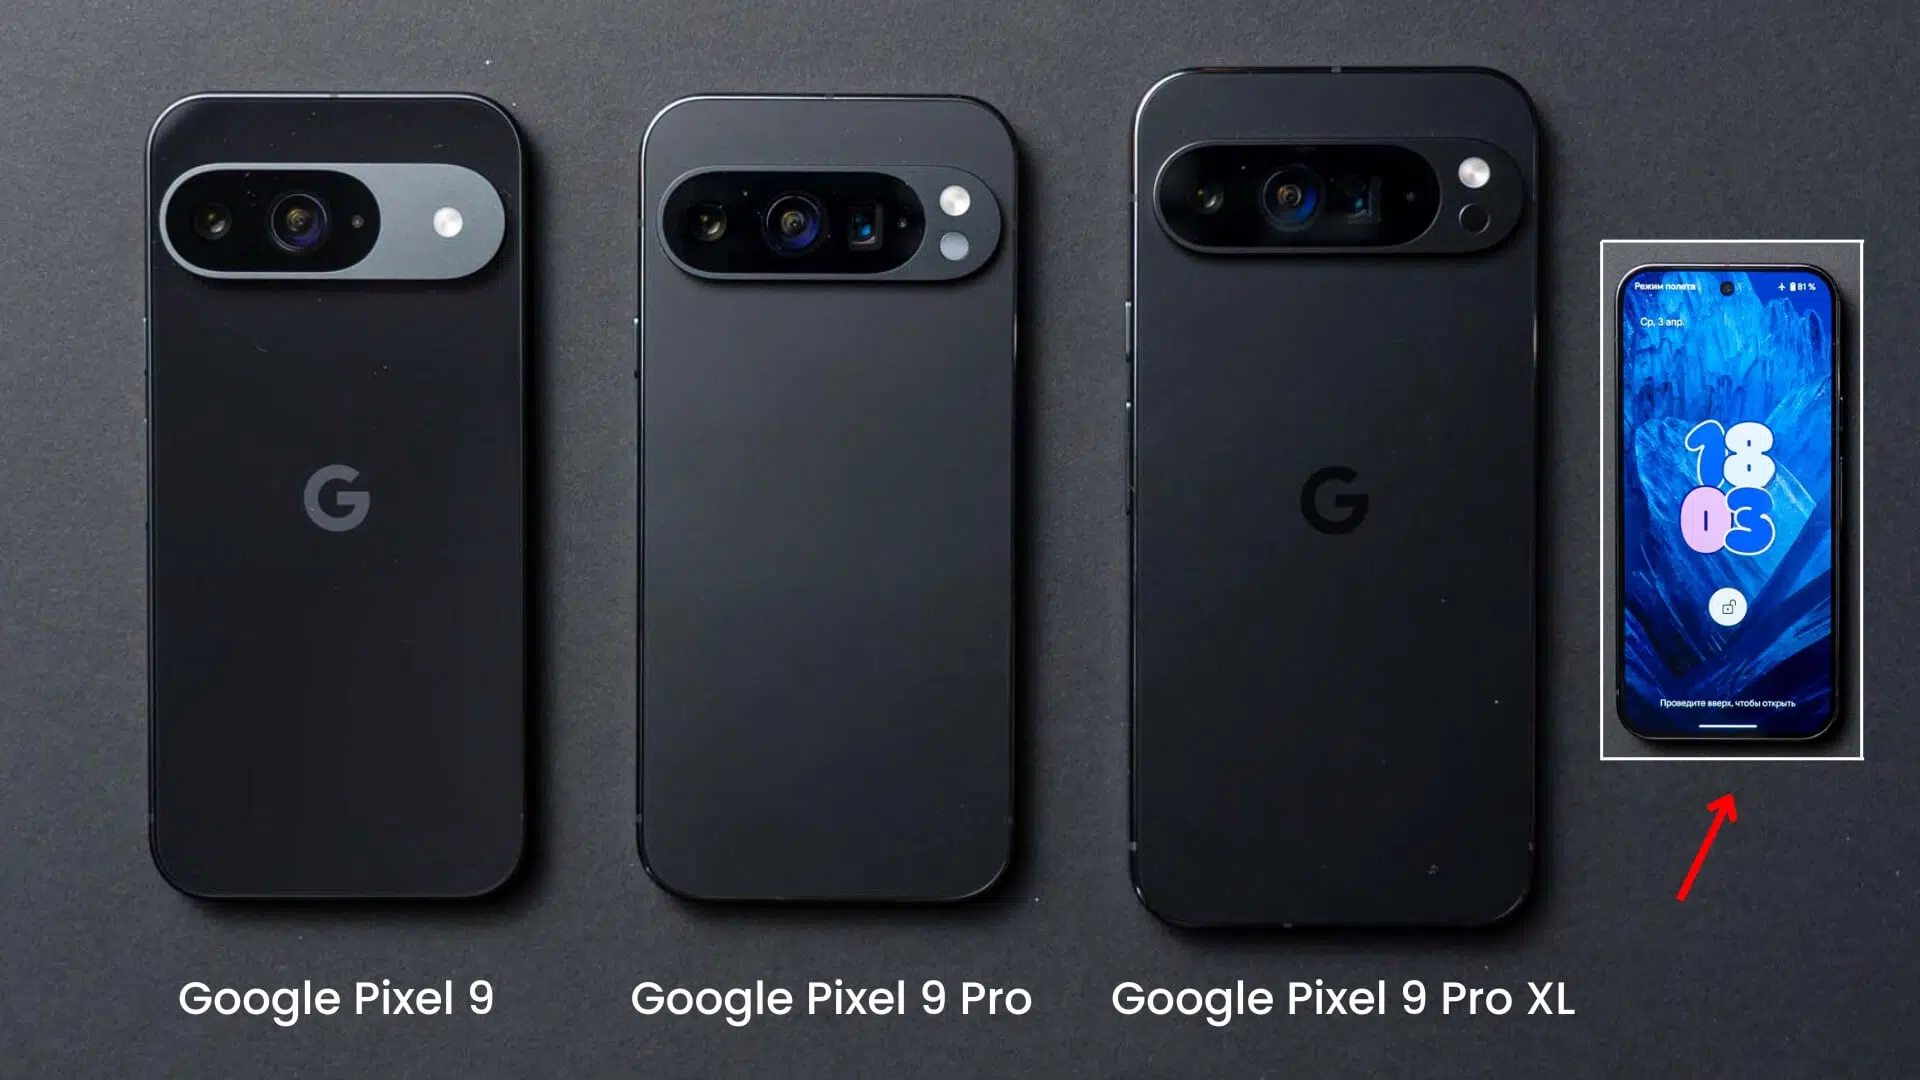 Google Pixel 9, Pixel 9 Pro, and Pixel 9 Pro XL